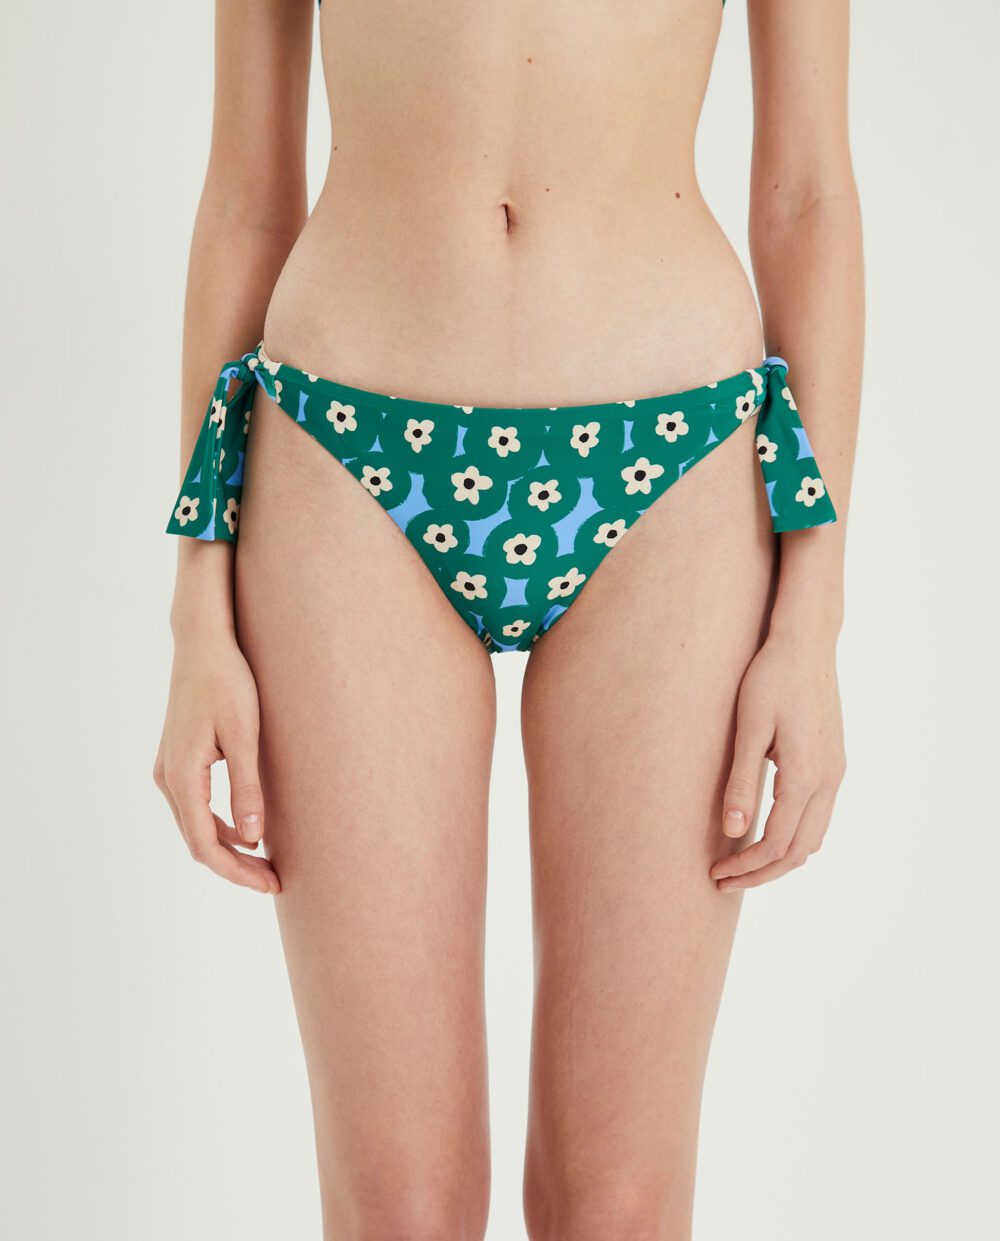 Bikini Bottom Μαγιό Με Πράσινο Φλοράλ Σχέδιο Compania Fantastica